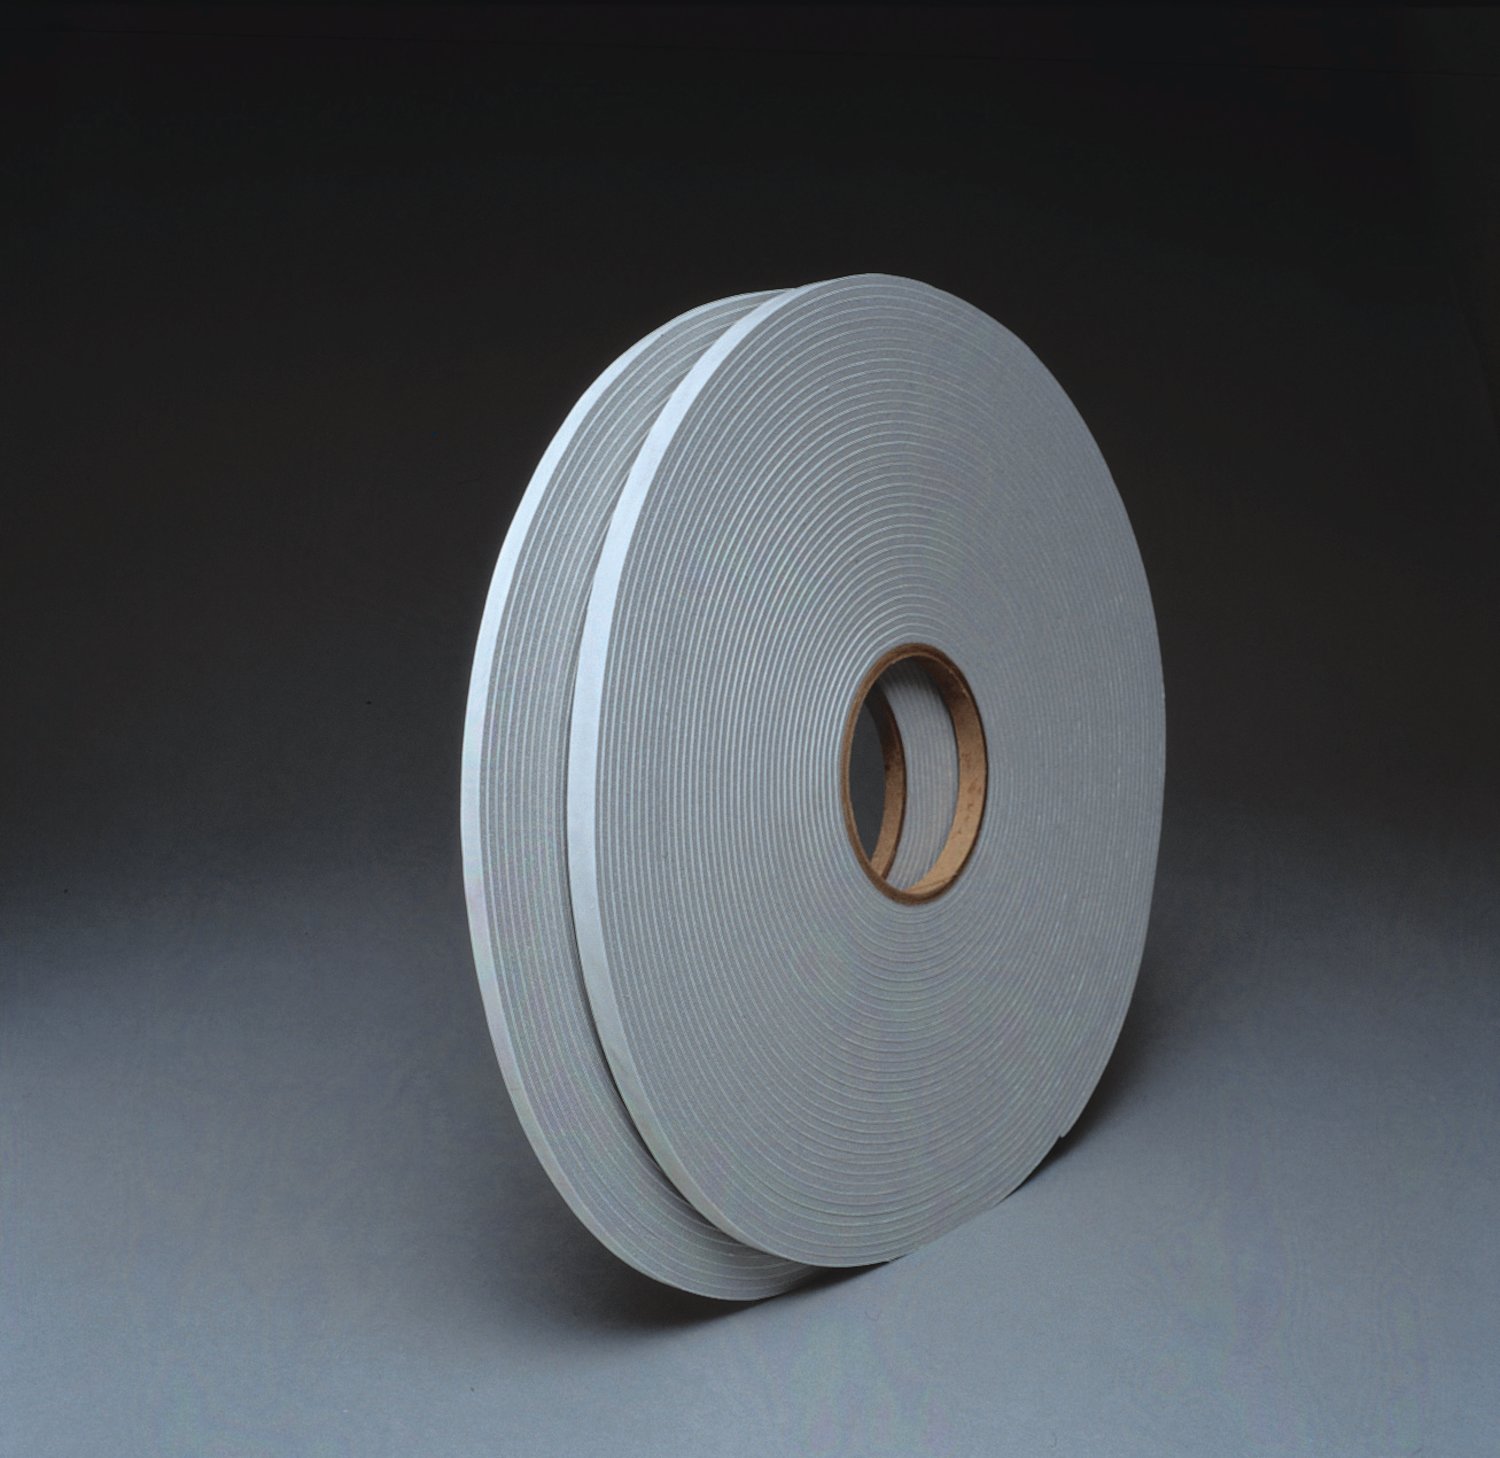 7010379941 - 3M Venture Tape Vinyl Foam Tape 1718, Gray, 3/8 in x 75 ft, 125 mil,
32 rolls per case